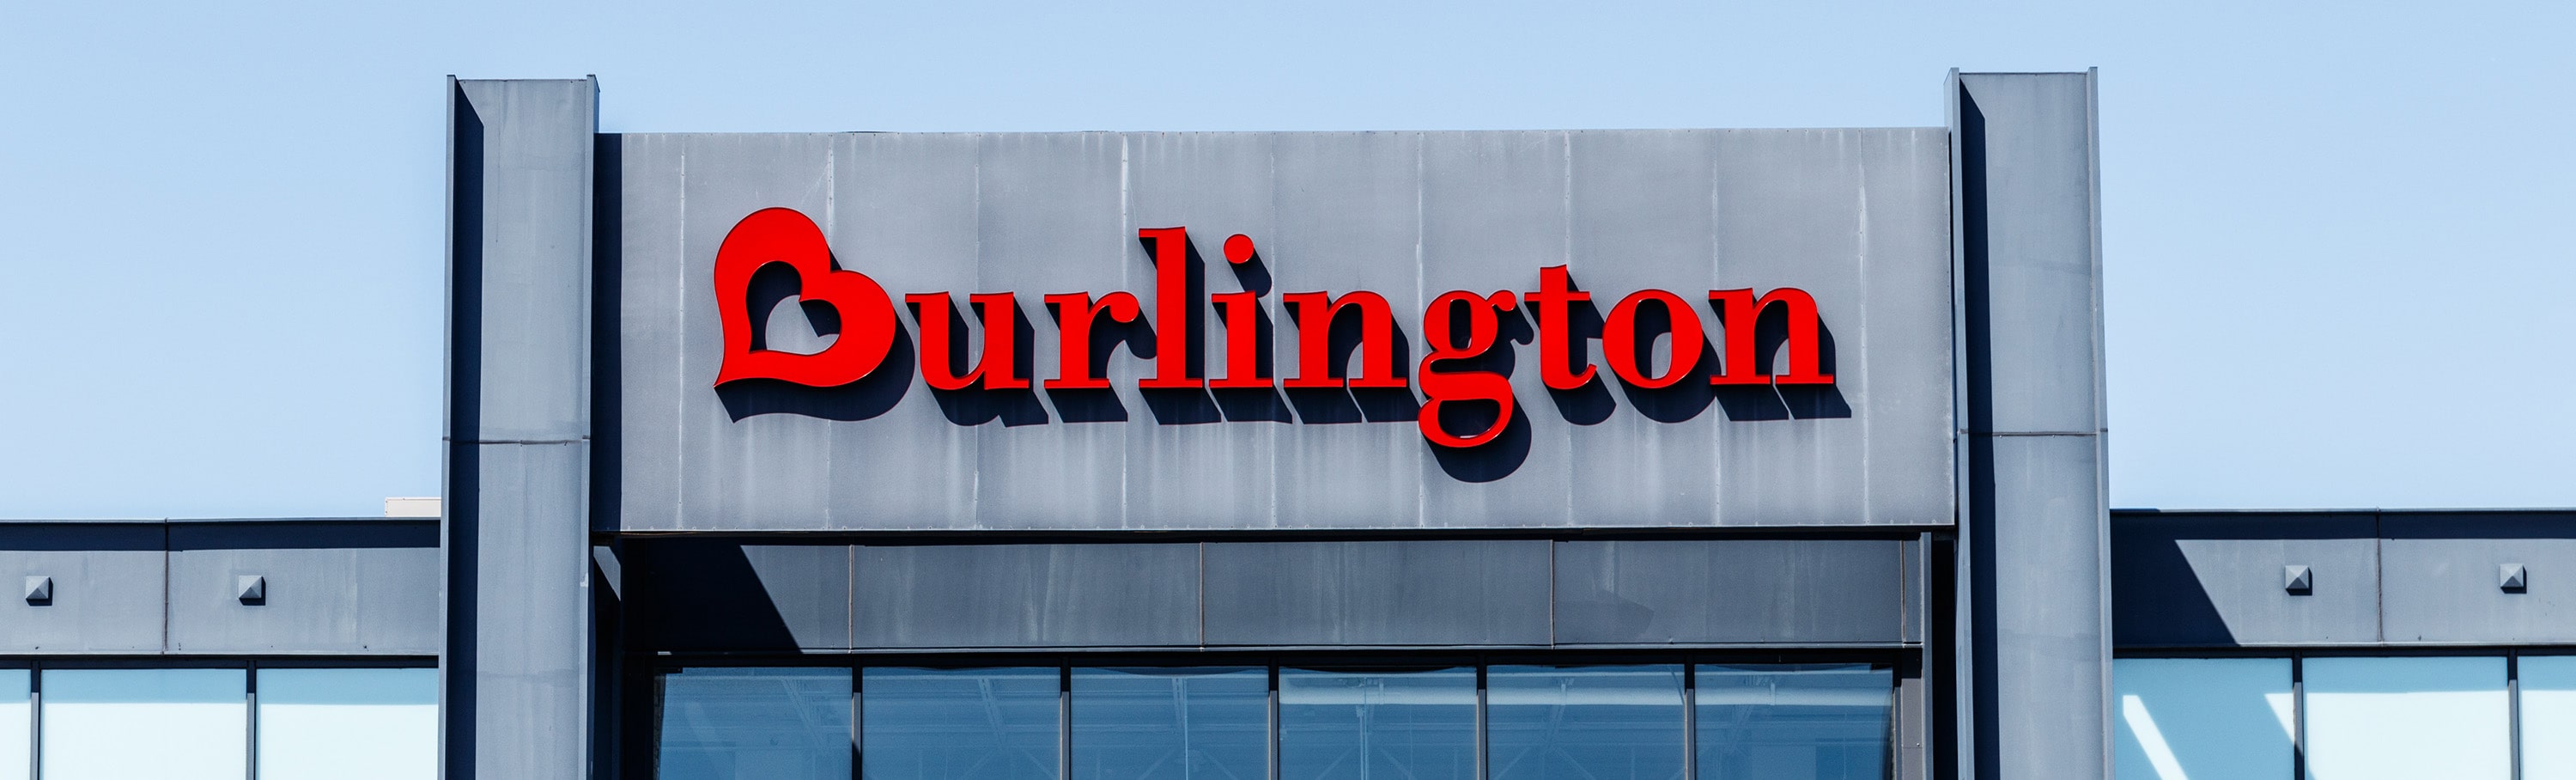 Burlington Stores Internship